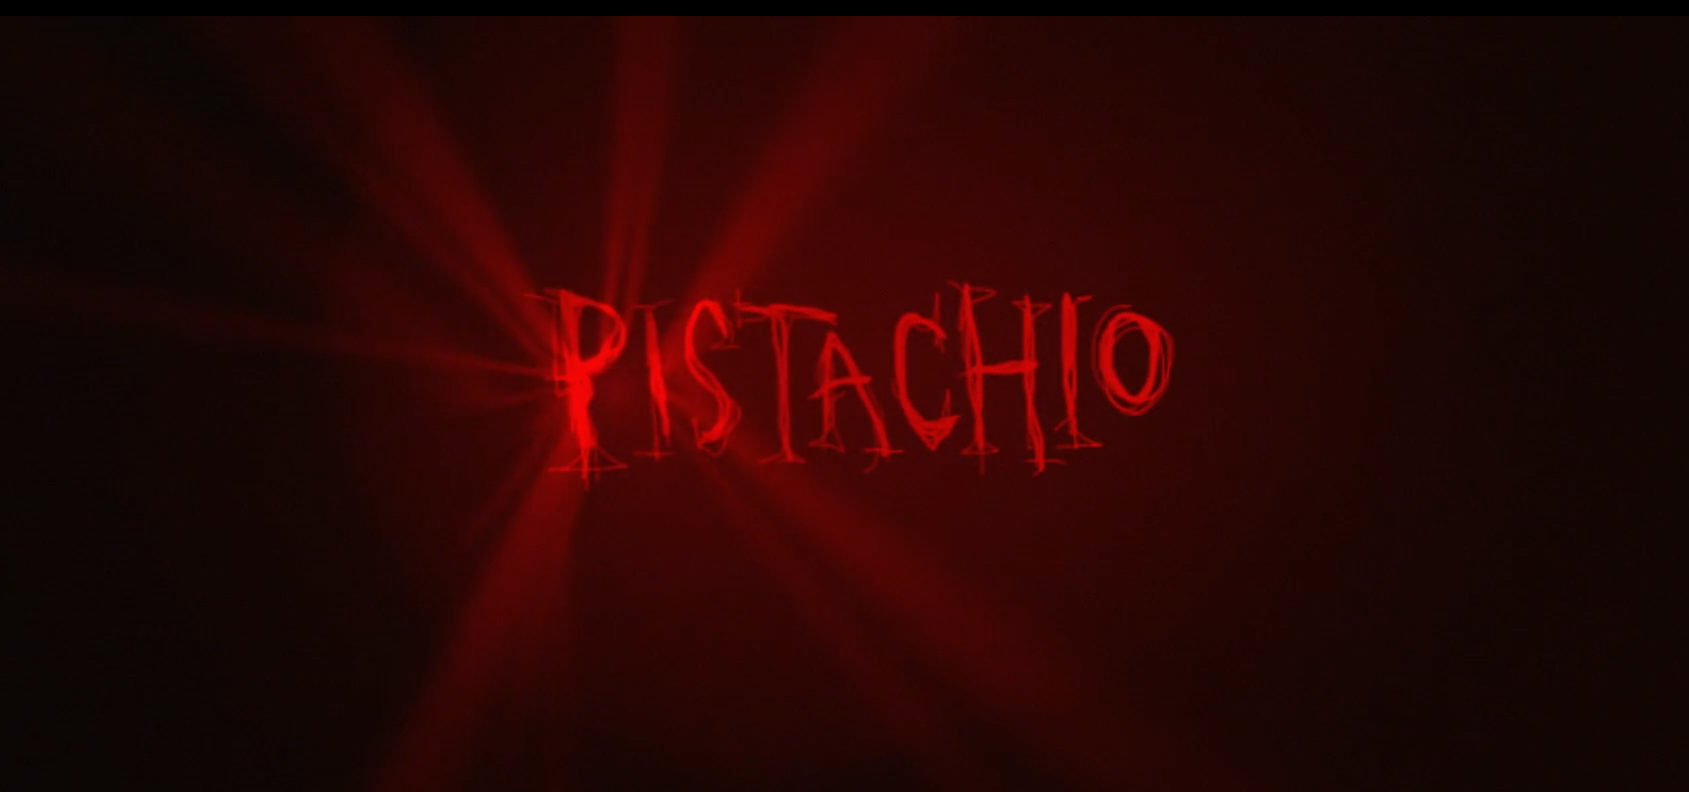 Pistachio: The Short Film That Won The Worcester Film War